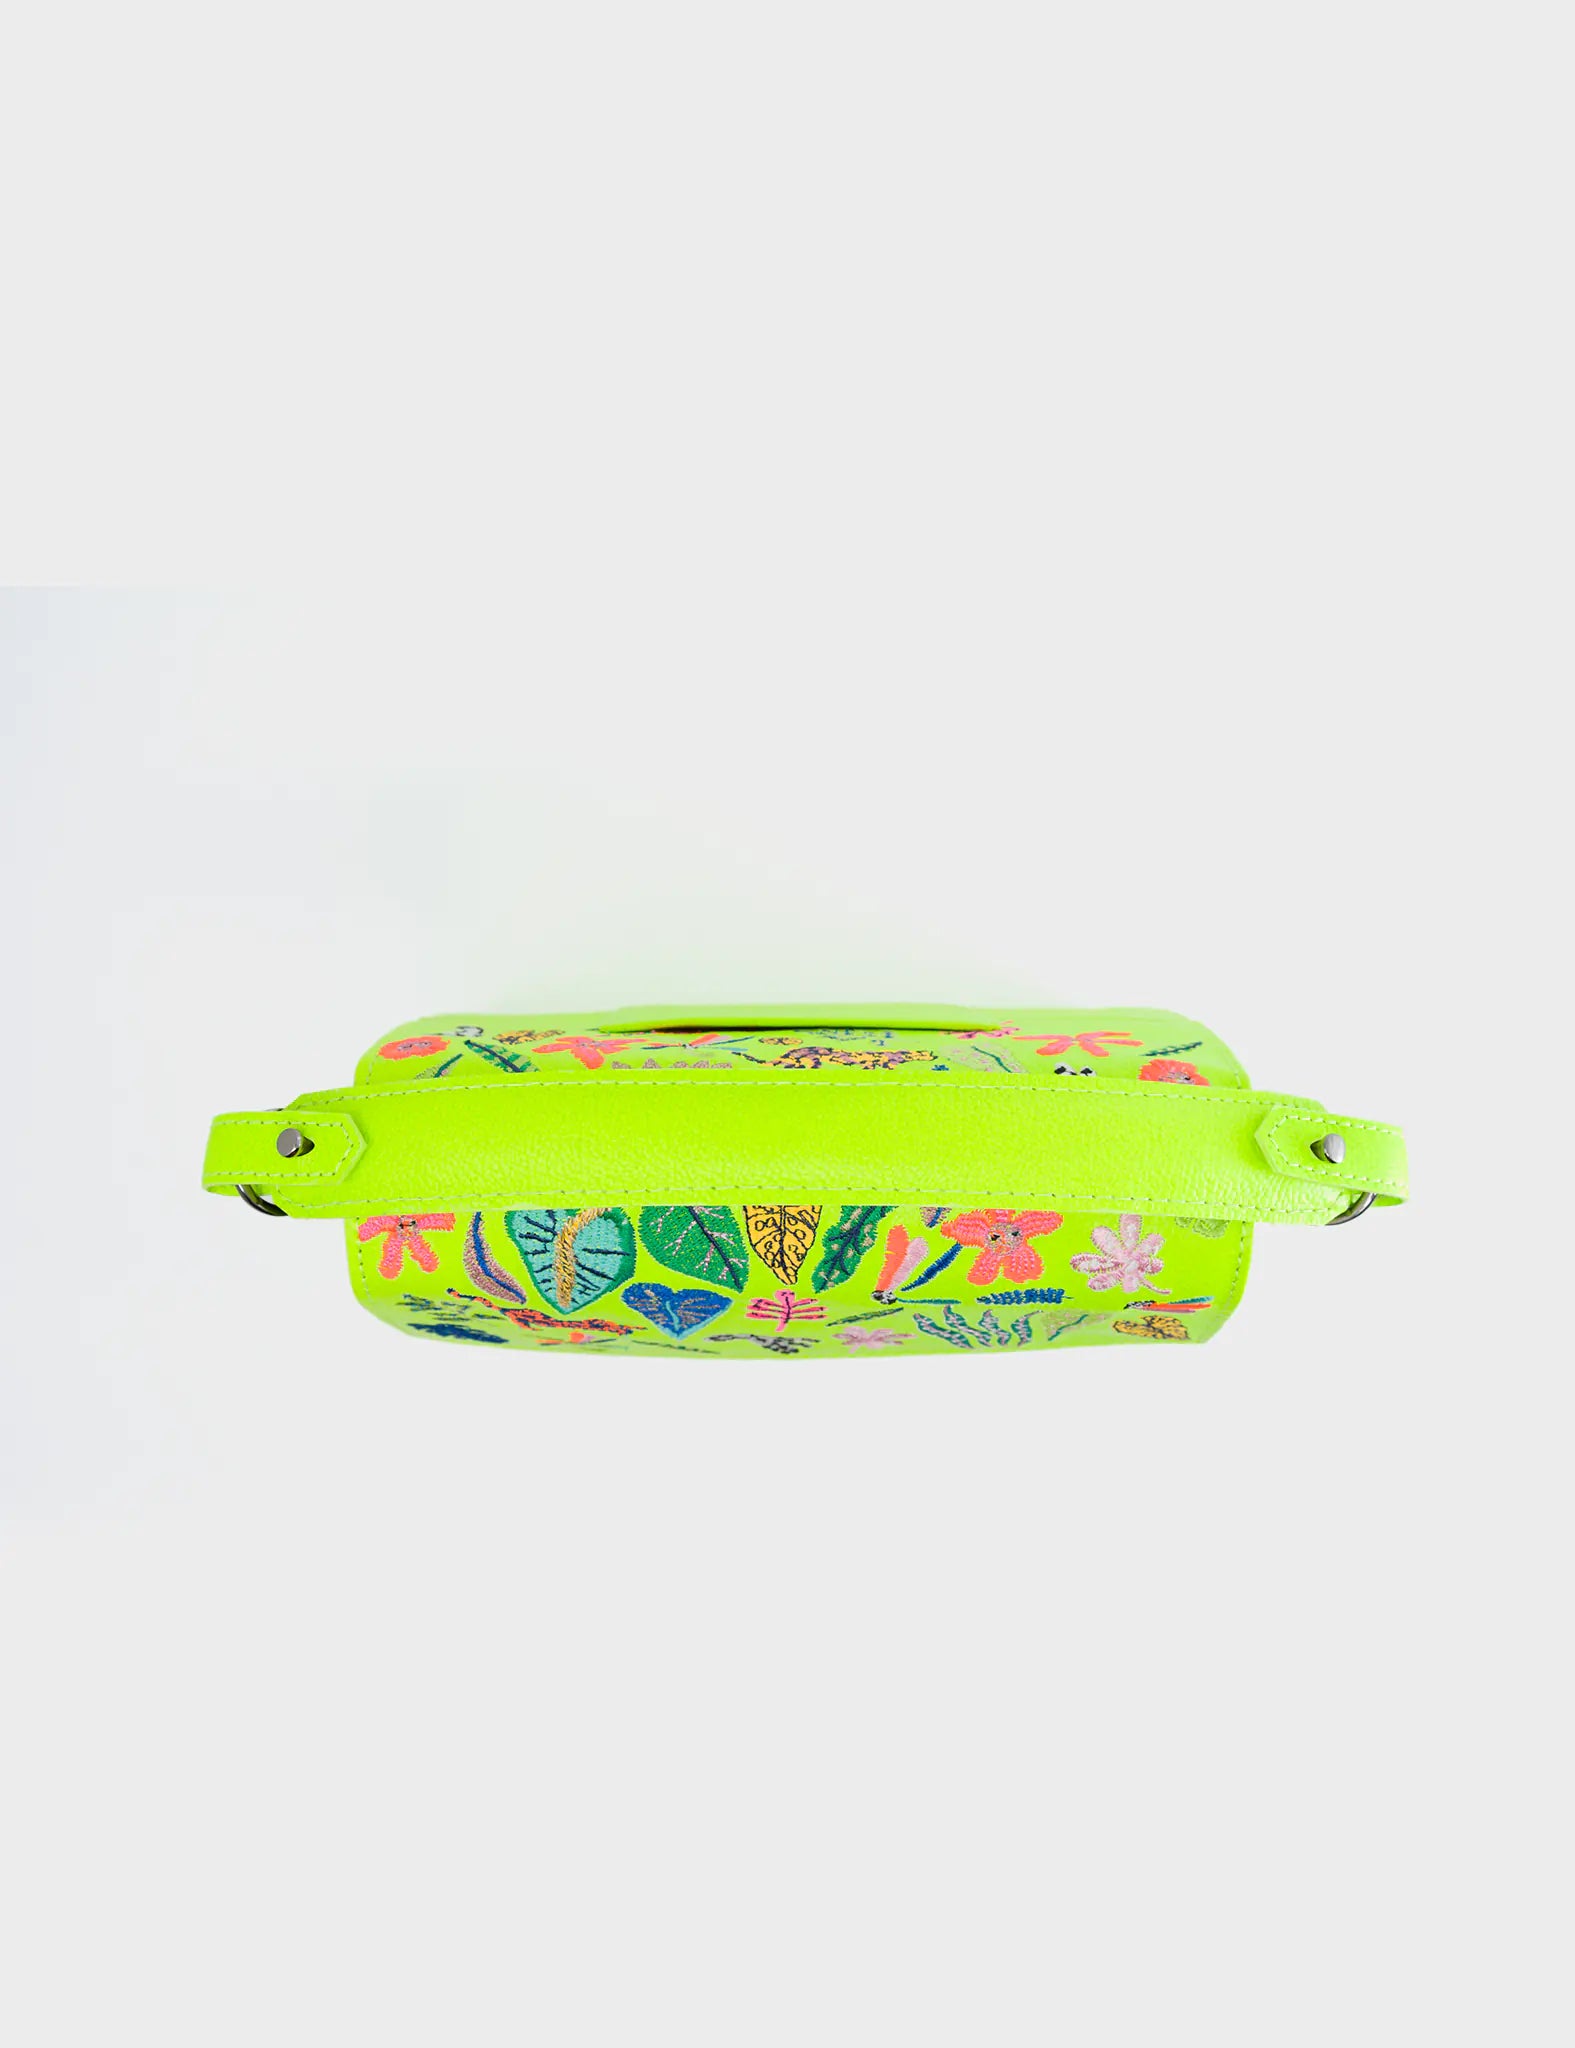 Anastasio Mini Crossbody Handbag Neon Yellow Leather - El Trópico Embroidery Design - Top